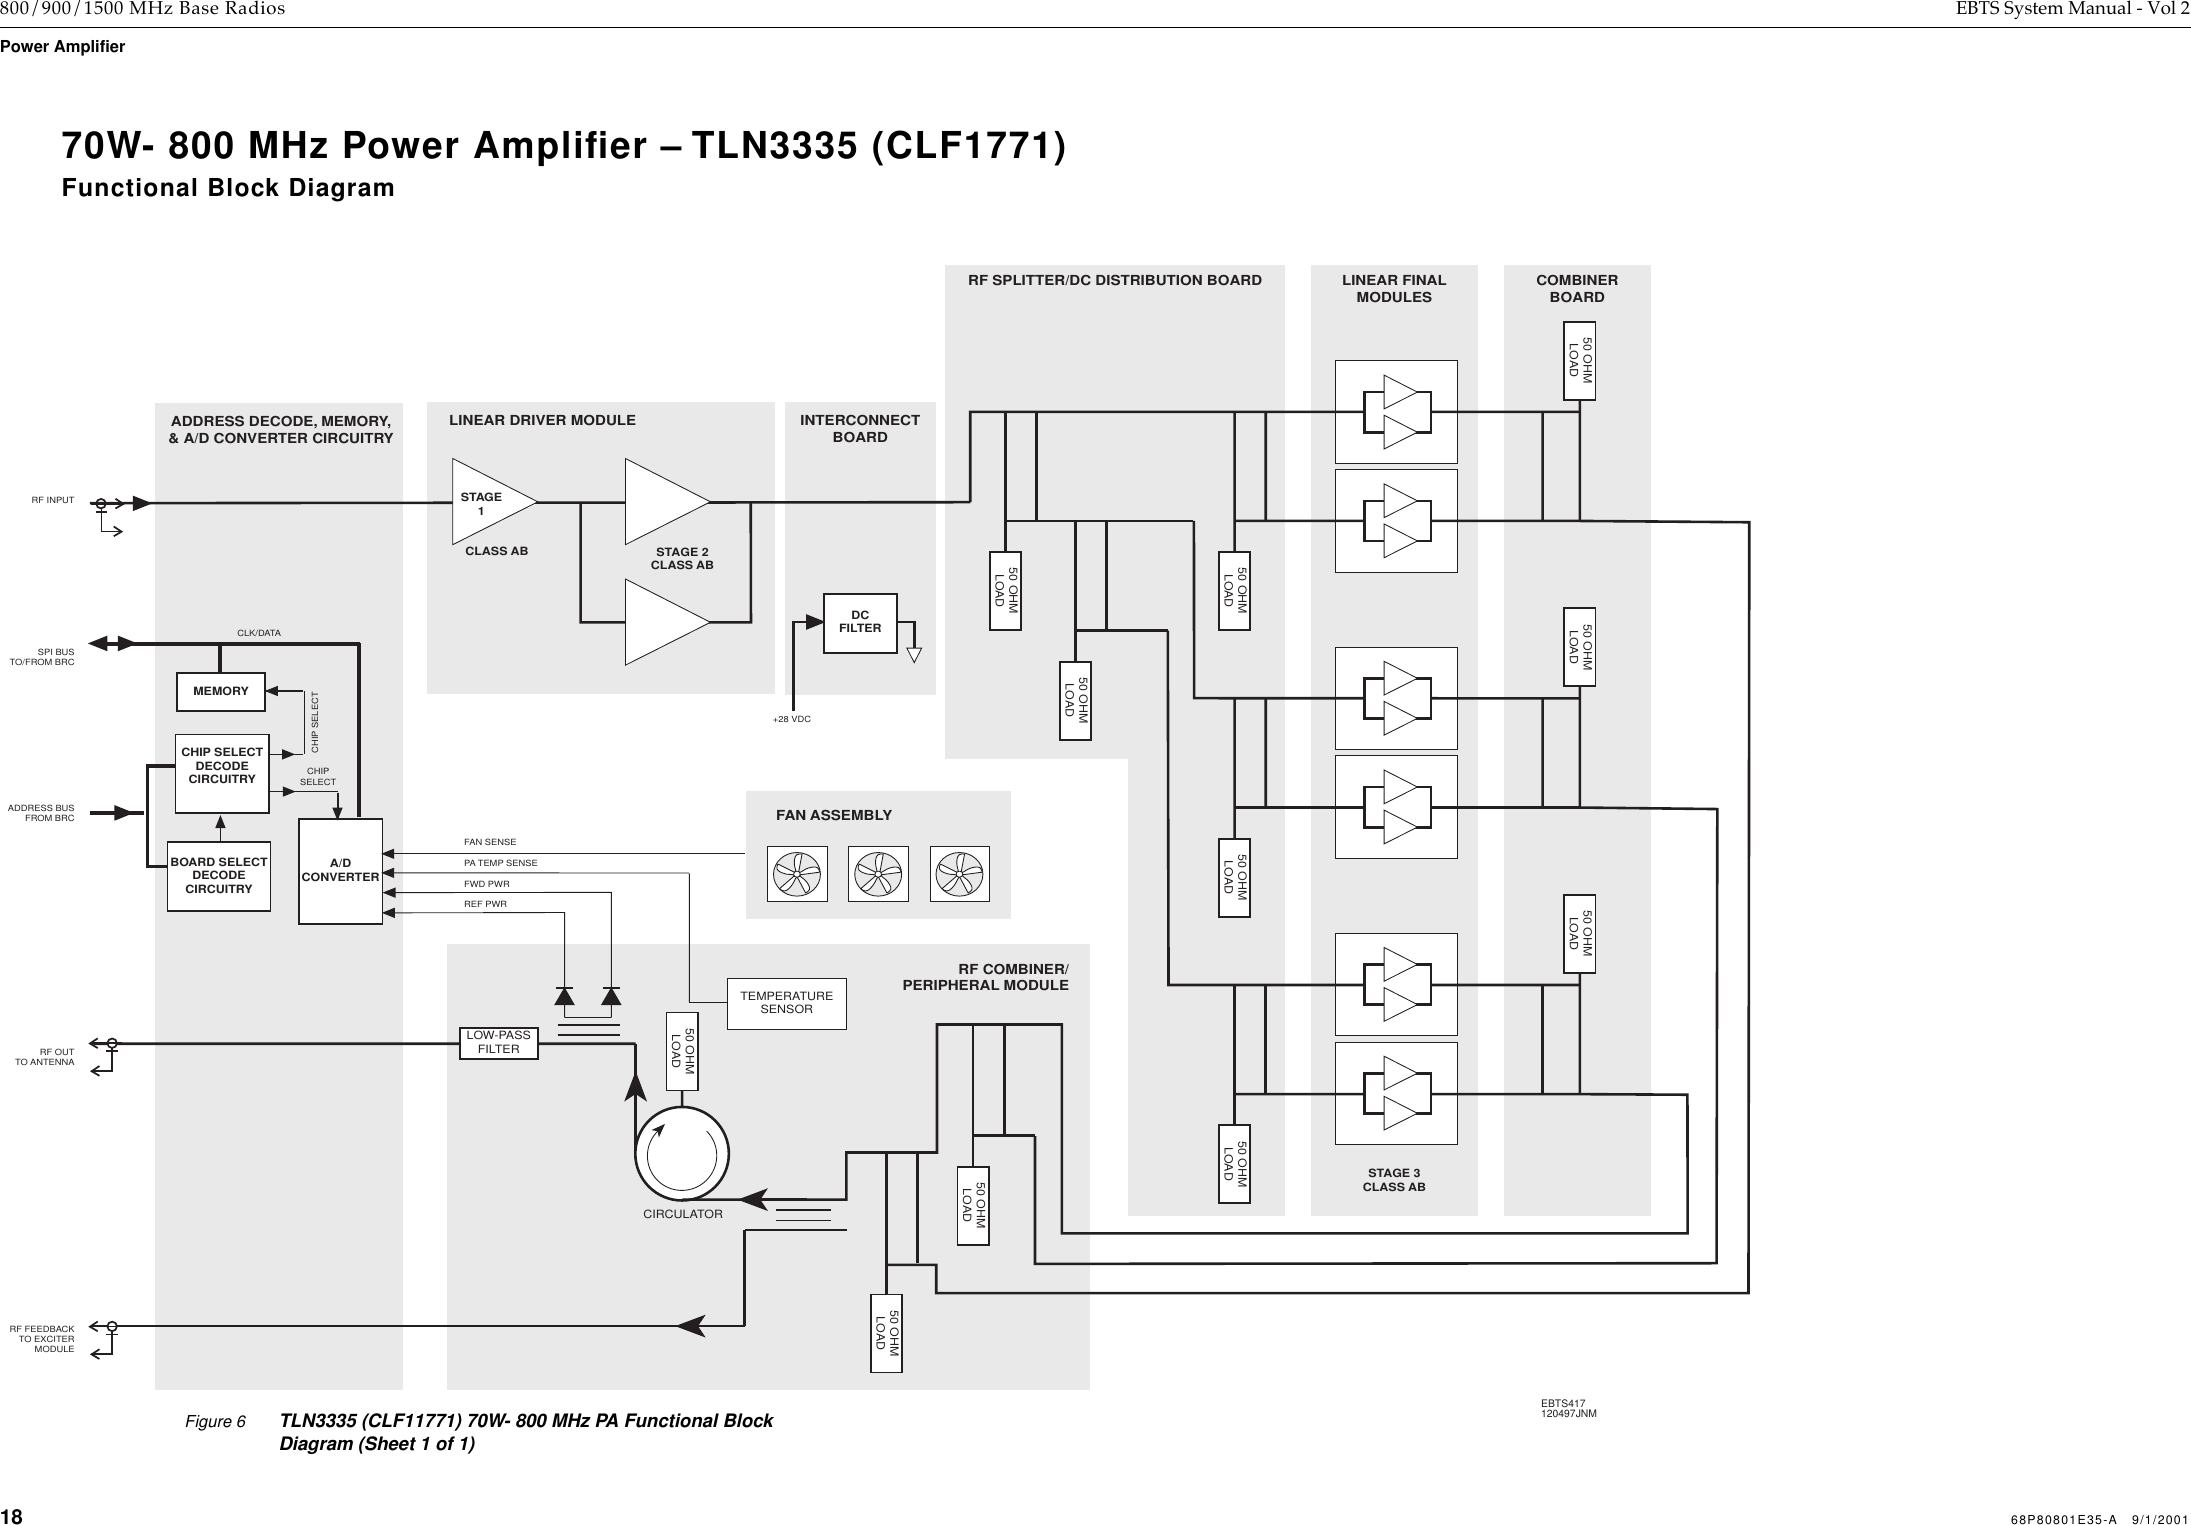 18 68P80801E35-A   9/1/2001 800/900/1500 MHz Base Radios EBTS System Manual - Vol 2Power Amplifier  COMBINERBOARDLINEAR DRIVER MODULELINEAR FINALMODULES50 OHMLOADADDRESS BUSFROM BRCSPI BUSTO/FROM BRCADDRESS DECODE, MEMORY,&amp; A/D CONVERTER CIRCUITRYMEMORYA/DCONVERTERBOARD SELECTDECODECIRCUITRYPA TEMP SENSECHIPSELECTCHIP SELECTDECODECIRCUITRYCHIP SELECTRF COMBINER/PERIPHERAL MODULELOW-PASSFILTERRF INPUTRF OUTTO ANTENNARF FEEDBACKTO EXCITERMODULEREF PWRFWD PWRFAN SENSEFAN ASSEMBLYTEMPERATURESENSOREBTS417120497JNMCLK/DATACIRCULATOR50 OHMLOAD50 OHMLOAD50 OHMLOAD50 OHMLOAD50 OHMLOAD50 OHMLOADSTAGE1CLASS AB STAGE 2CLASS ABRF SPLITTER/DC DISTRIBUTION BOARDINTERCONNECTBOARDSTAGE 3CLASS AB50 OHMLOAD50 OHMLOAD50 OHMLOAD50 OHMLOADDCFILTER+28 VDCFigure 6 TLN3335 (CLF11771) 70W- 800 MHz PA Functional Block Diagram (Sheet 1 of 1)70W- 800 MHz Power Ampliﬁer – TLN3335 (CLF1771)Functional Block Diagram